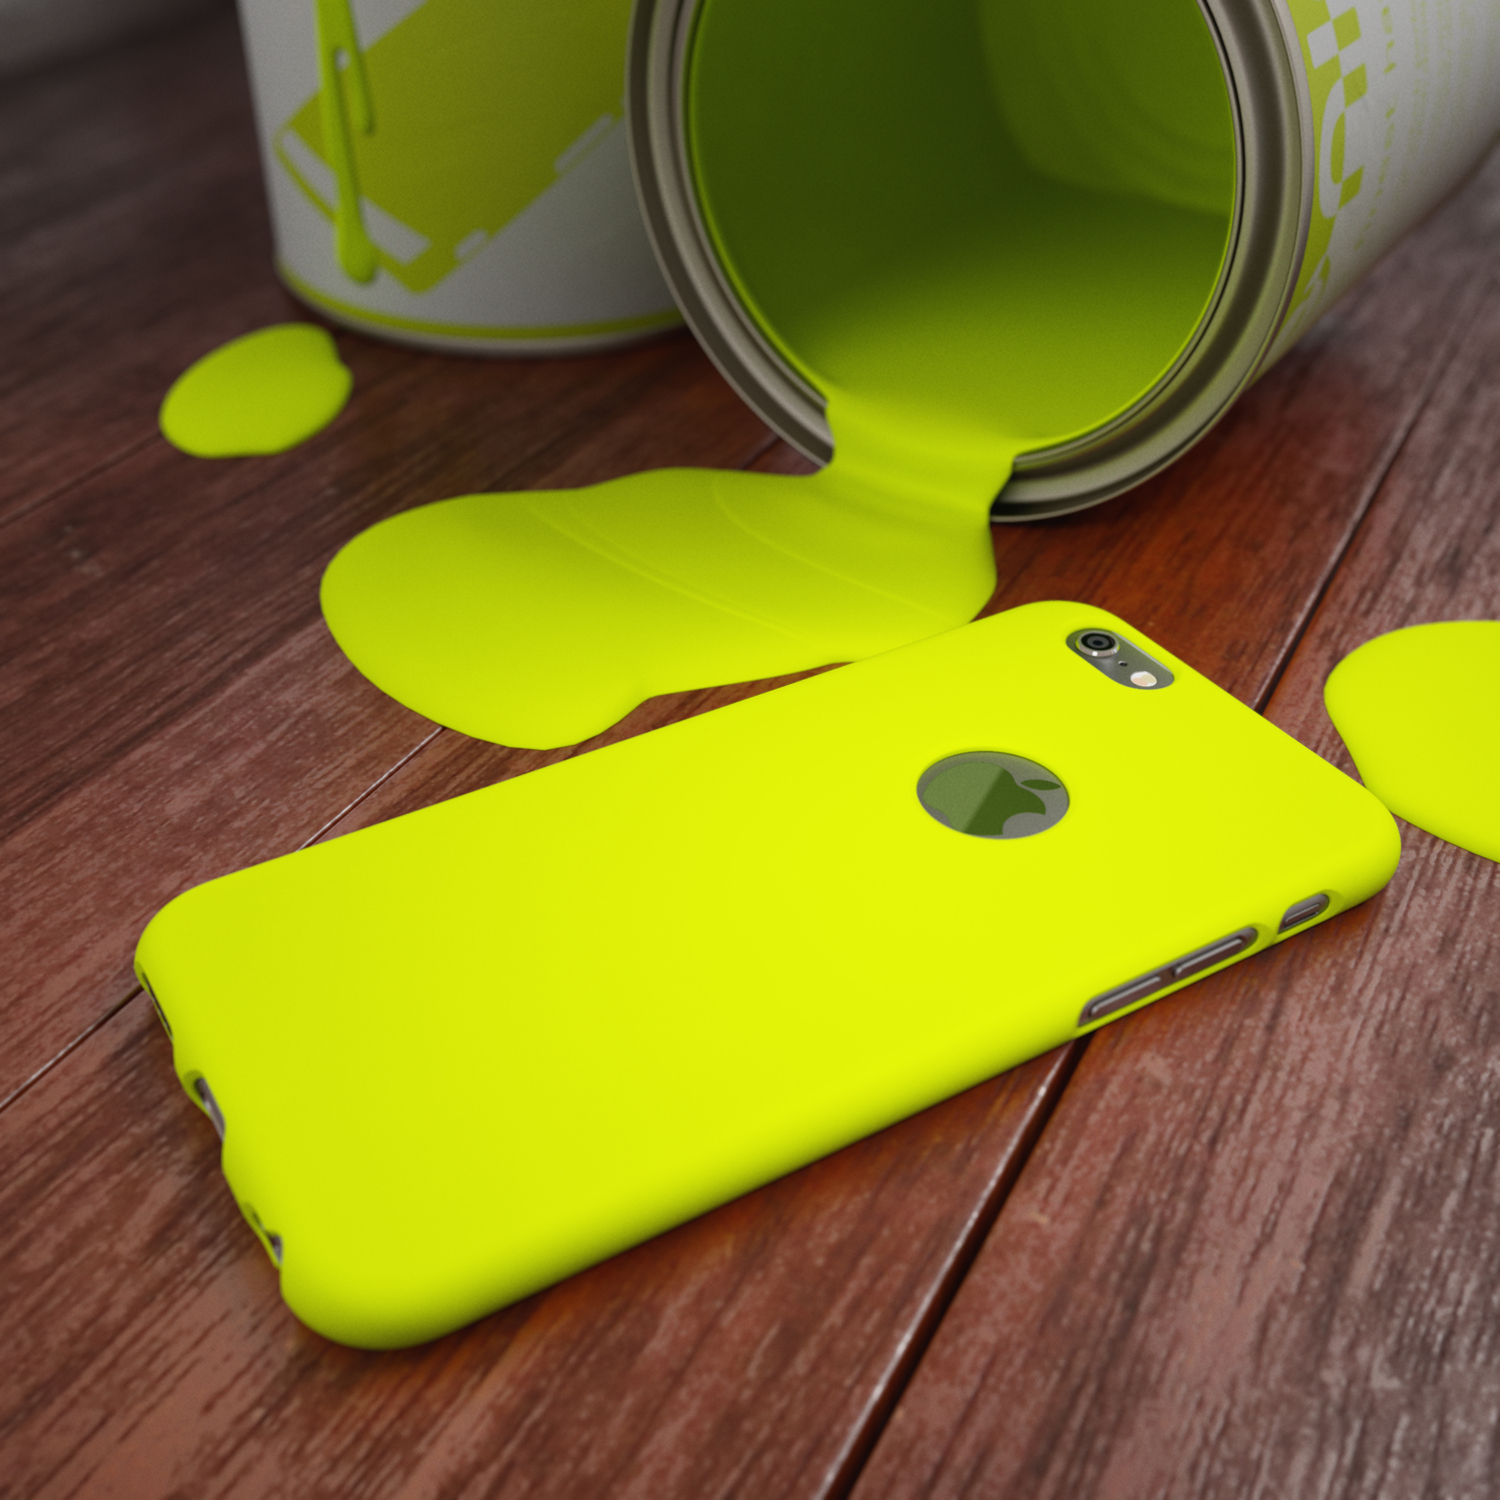 NALIA Neon Apple, Backcover, iPhone 6s, Gelb 6 Silikon Hülle, iPhone